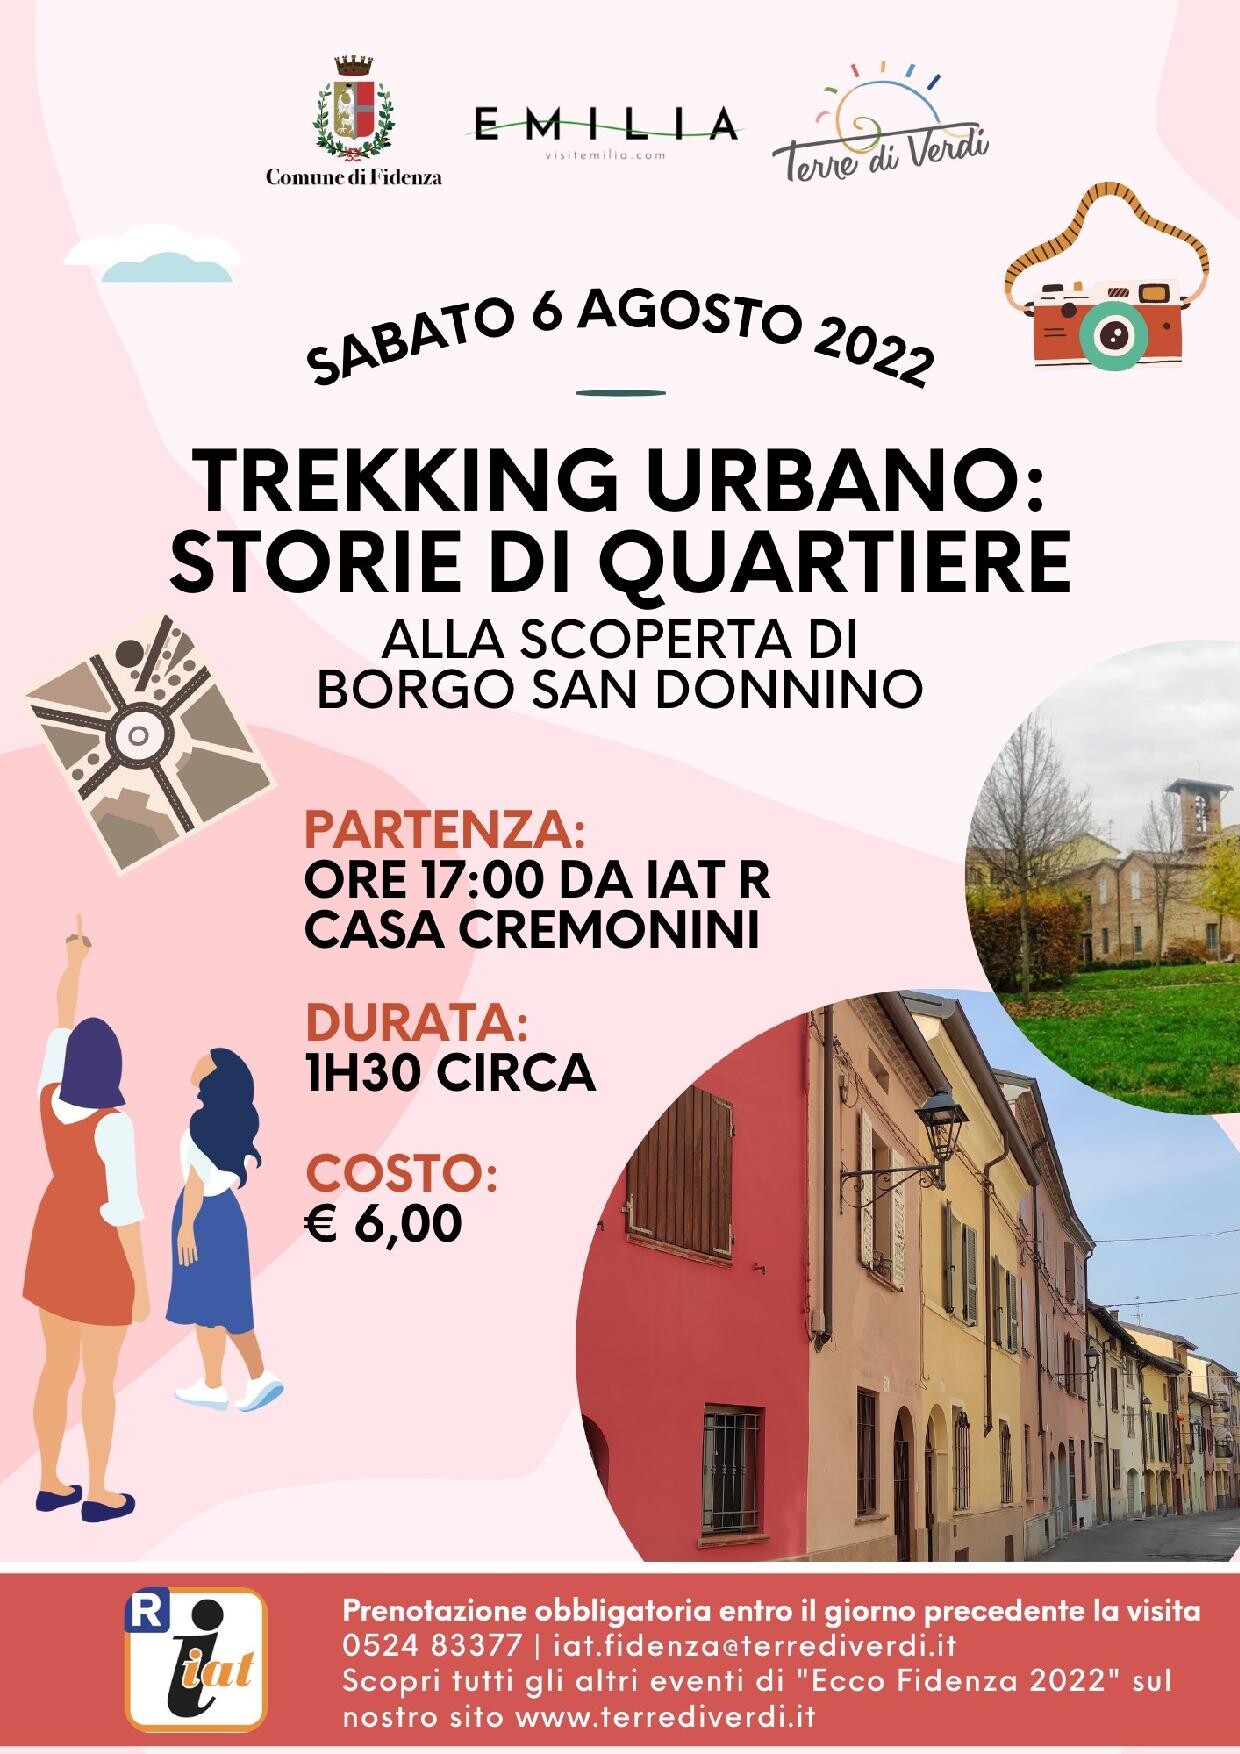 EccoFidenza2022 – Trekking urbano “Storie di Quartiere”